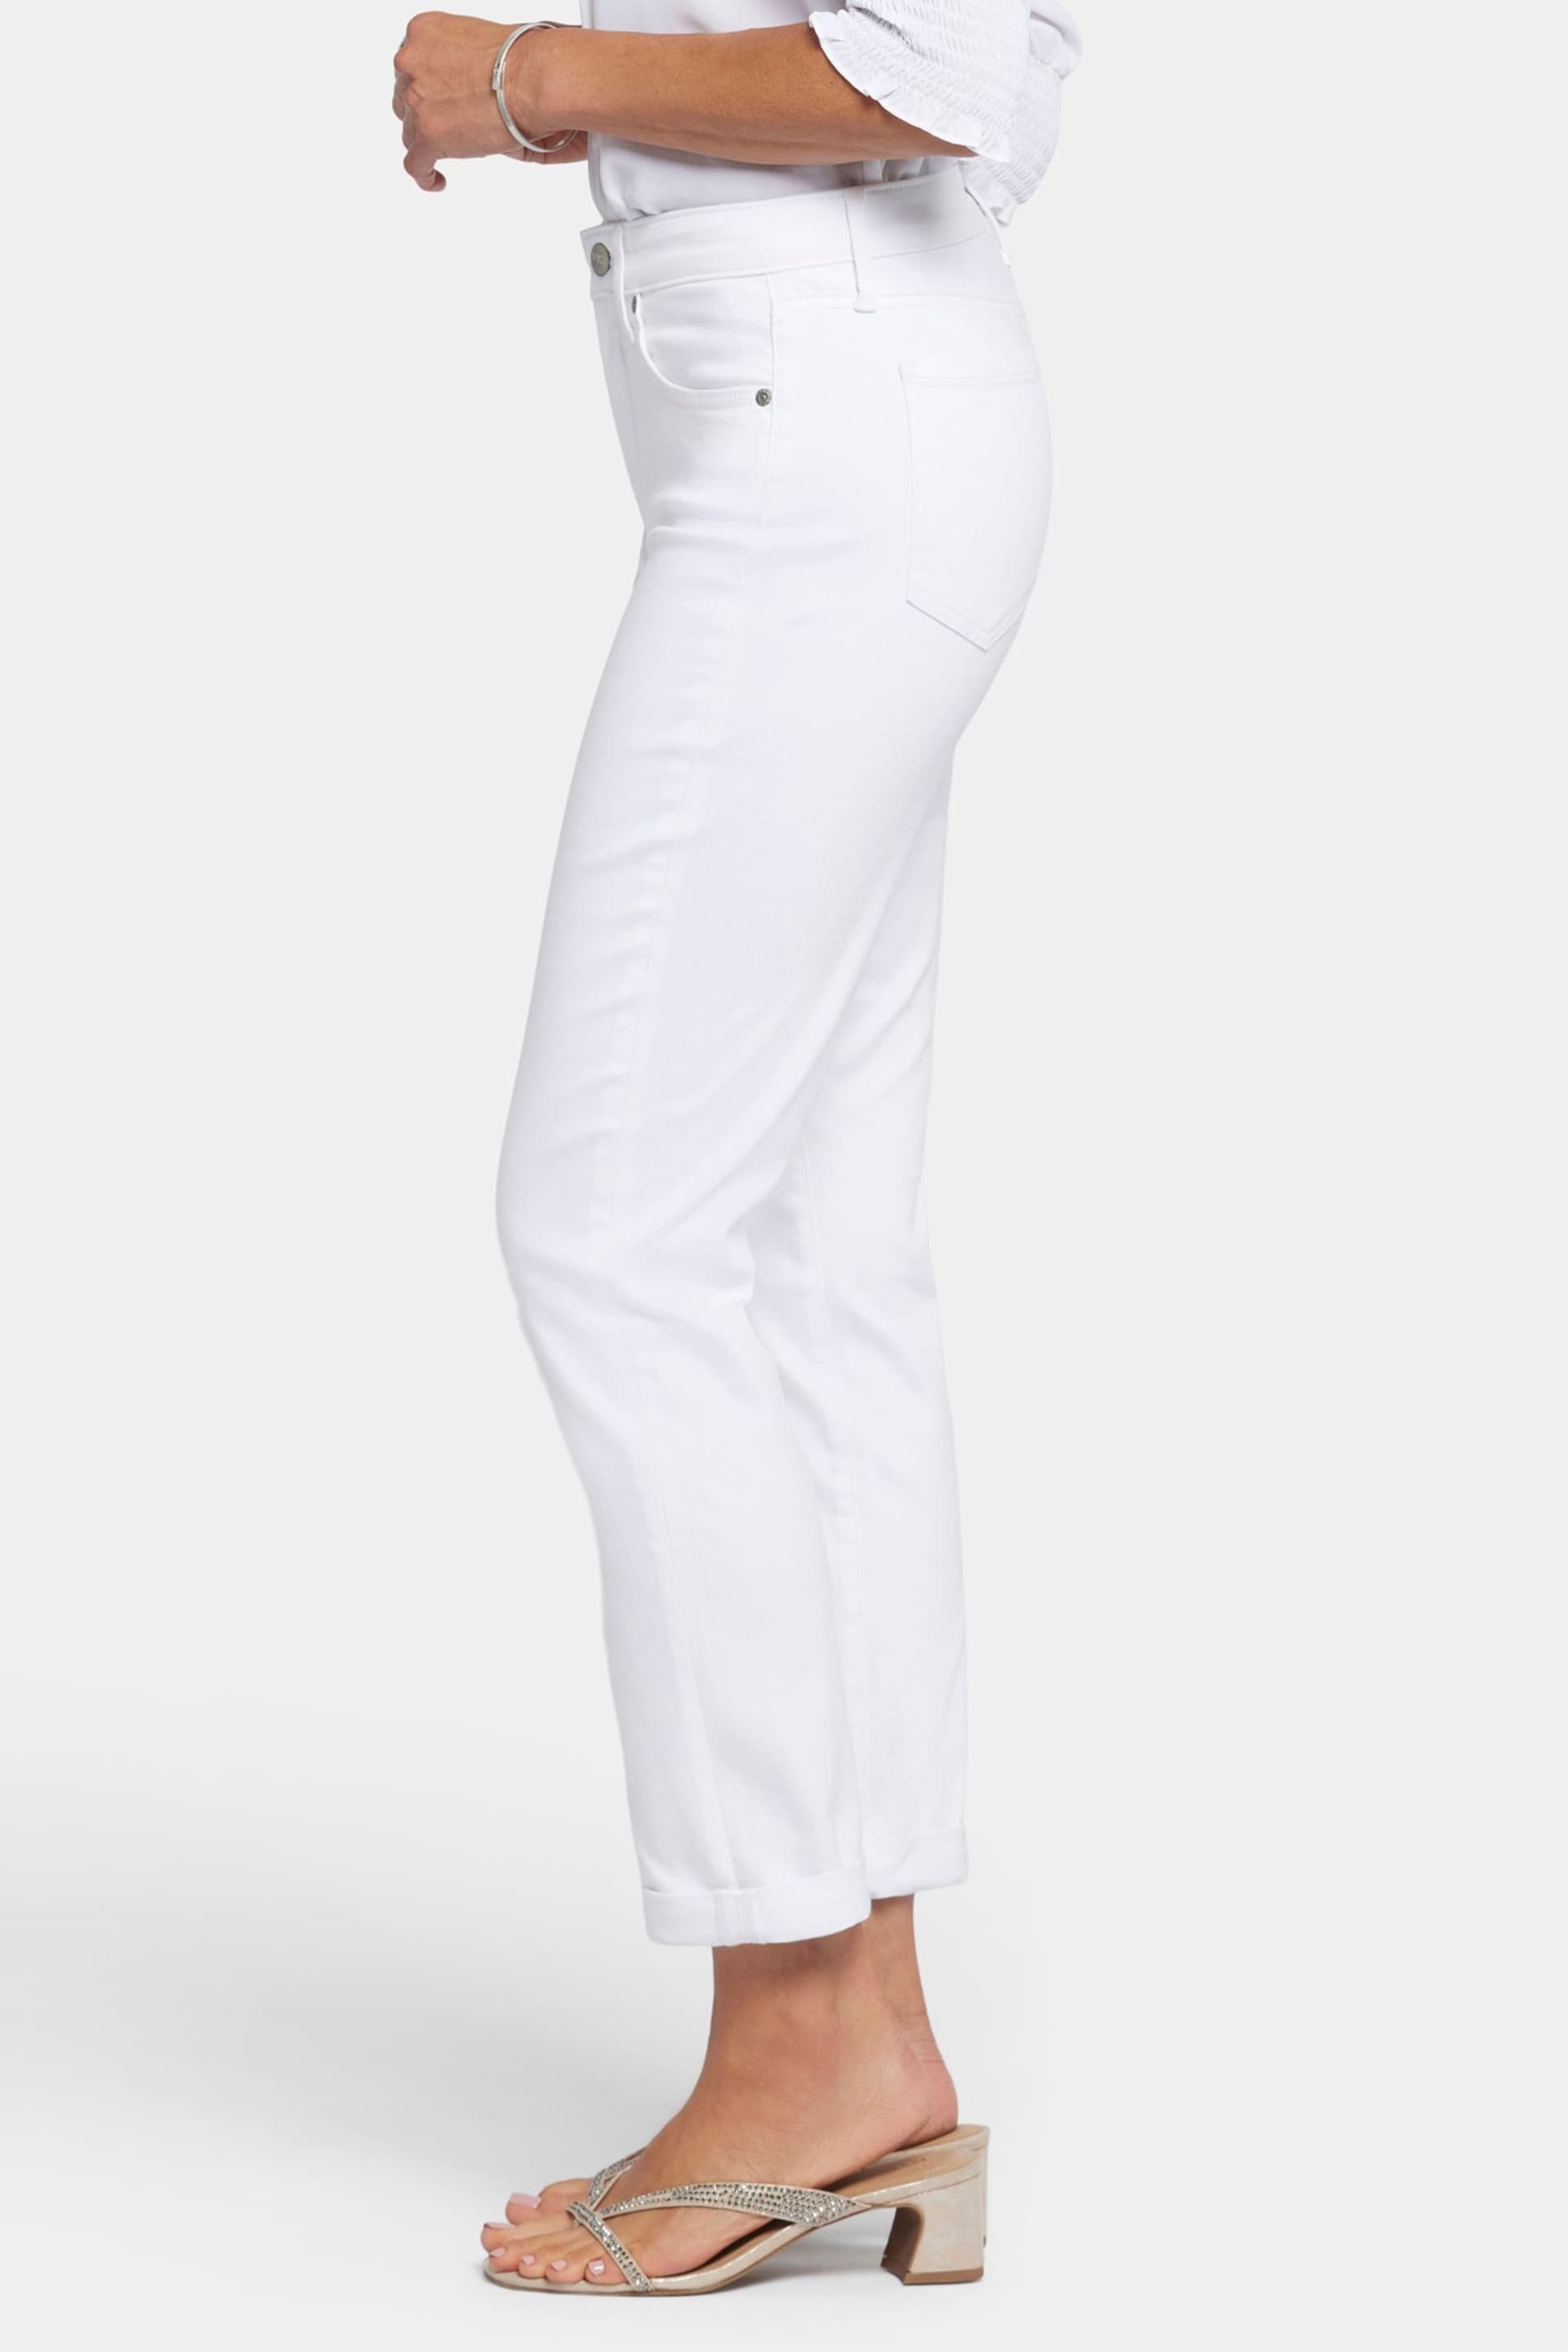 NYDJ Margot Girlfriend White Jeans - Image 3 of 7